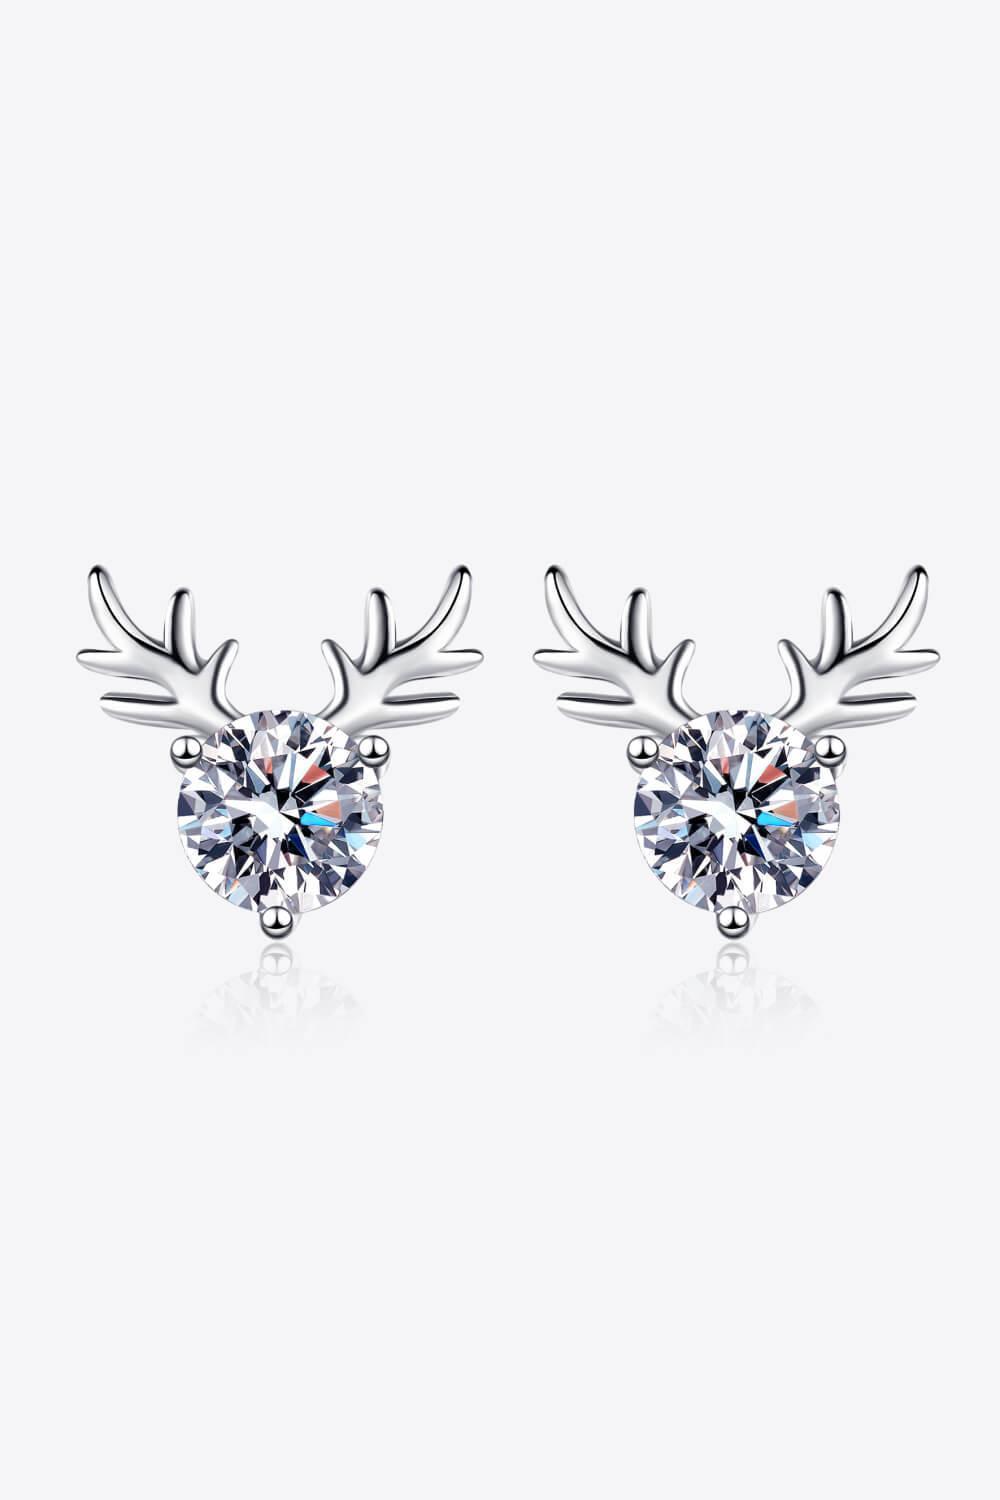 Joyous Reindeer-Shaped 1 Carat Moissanite Stud Earrings - MXSTUDIO.COM